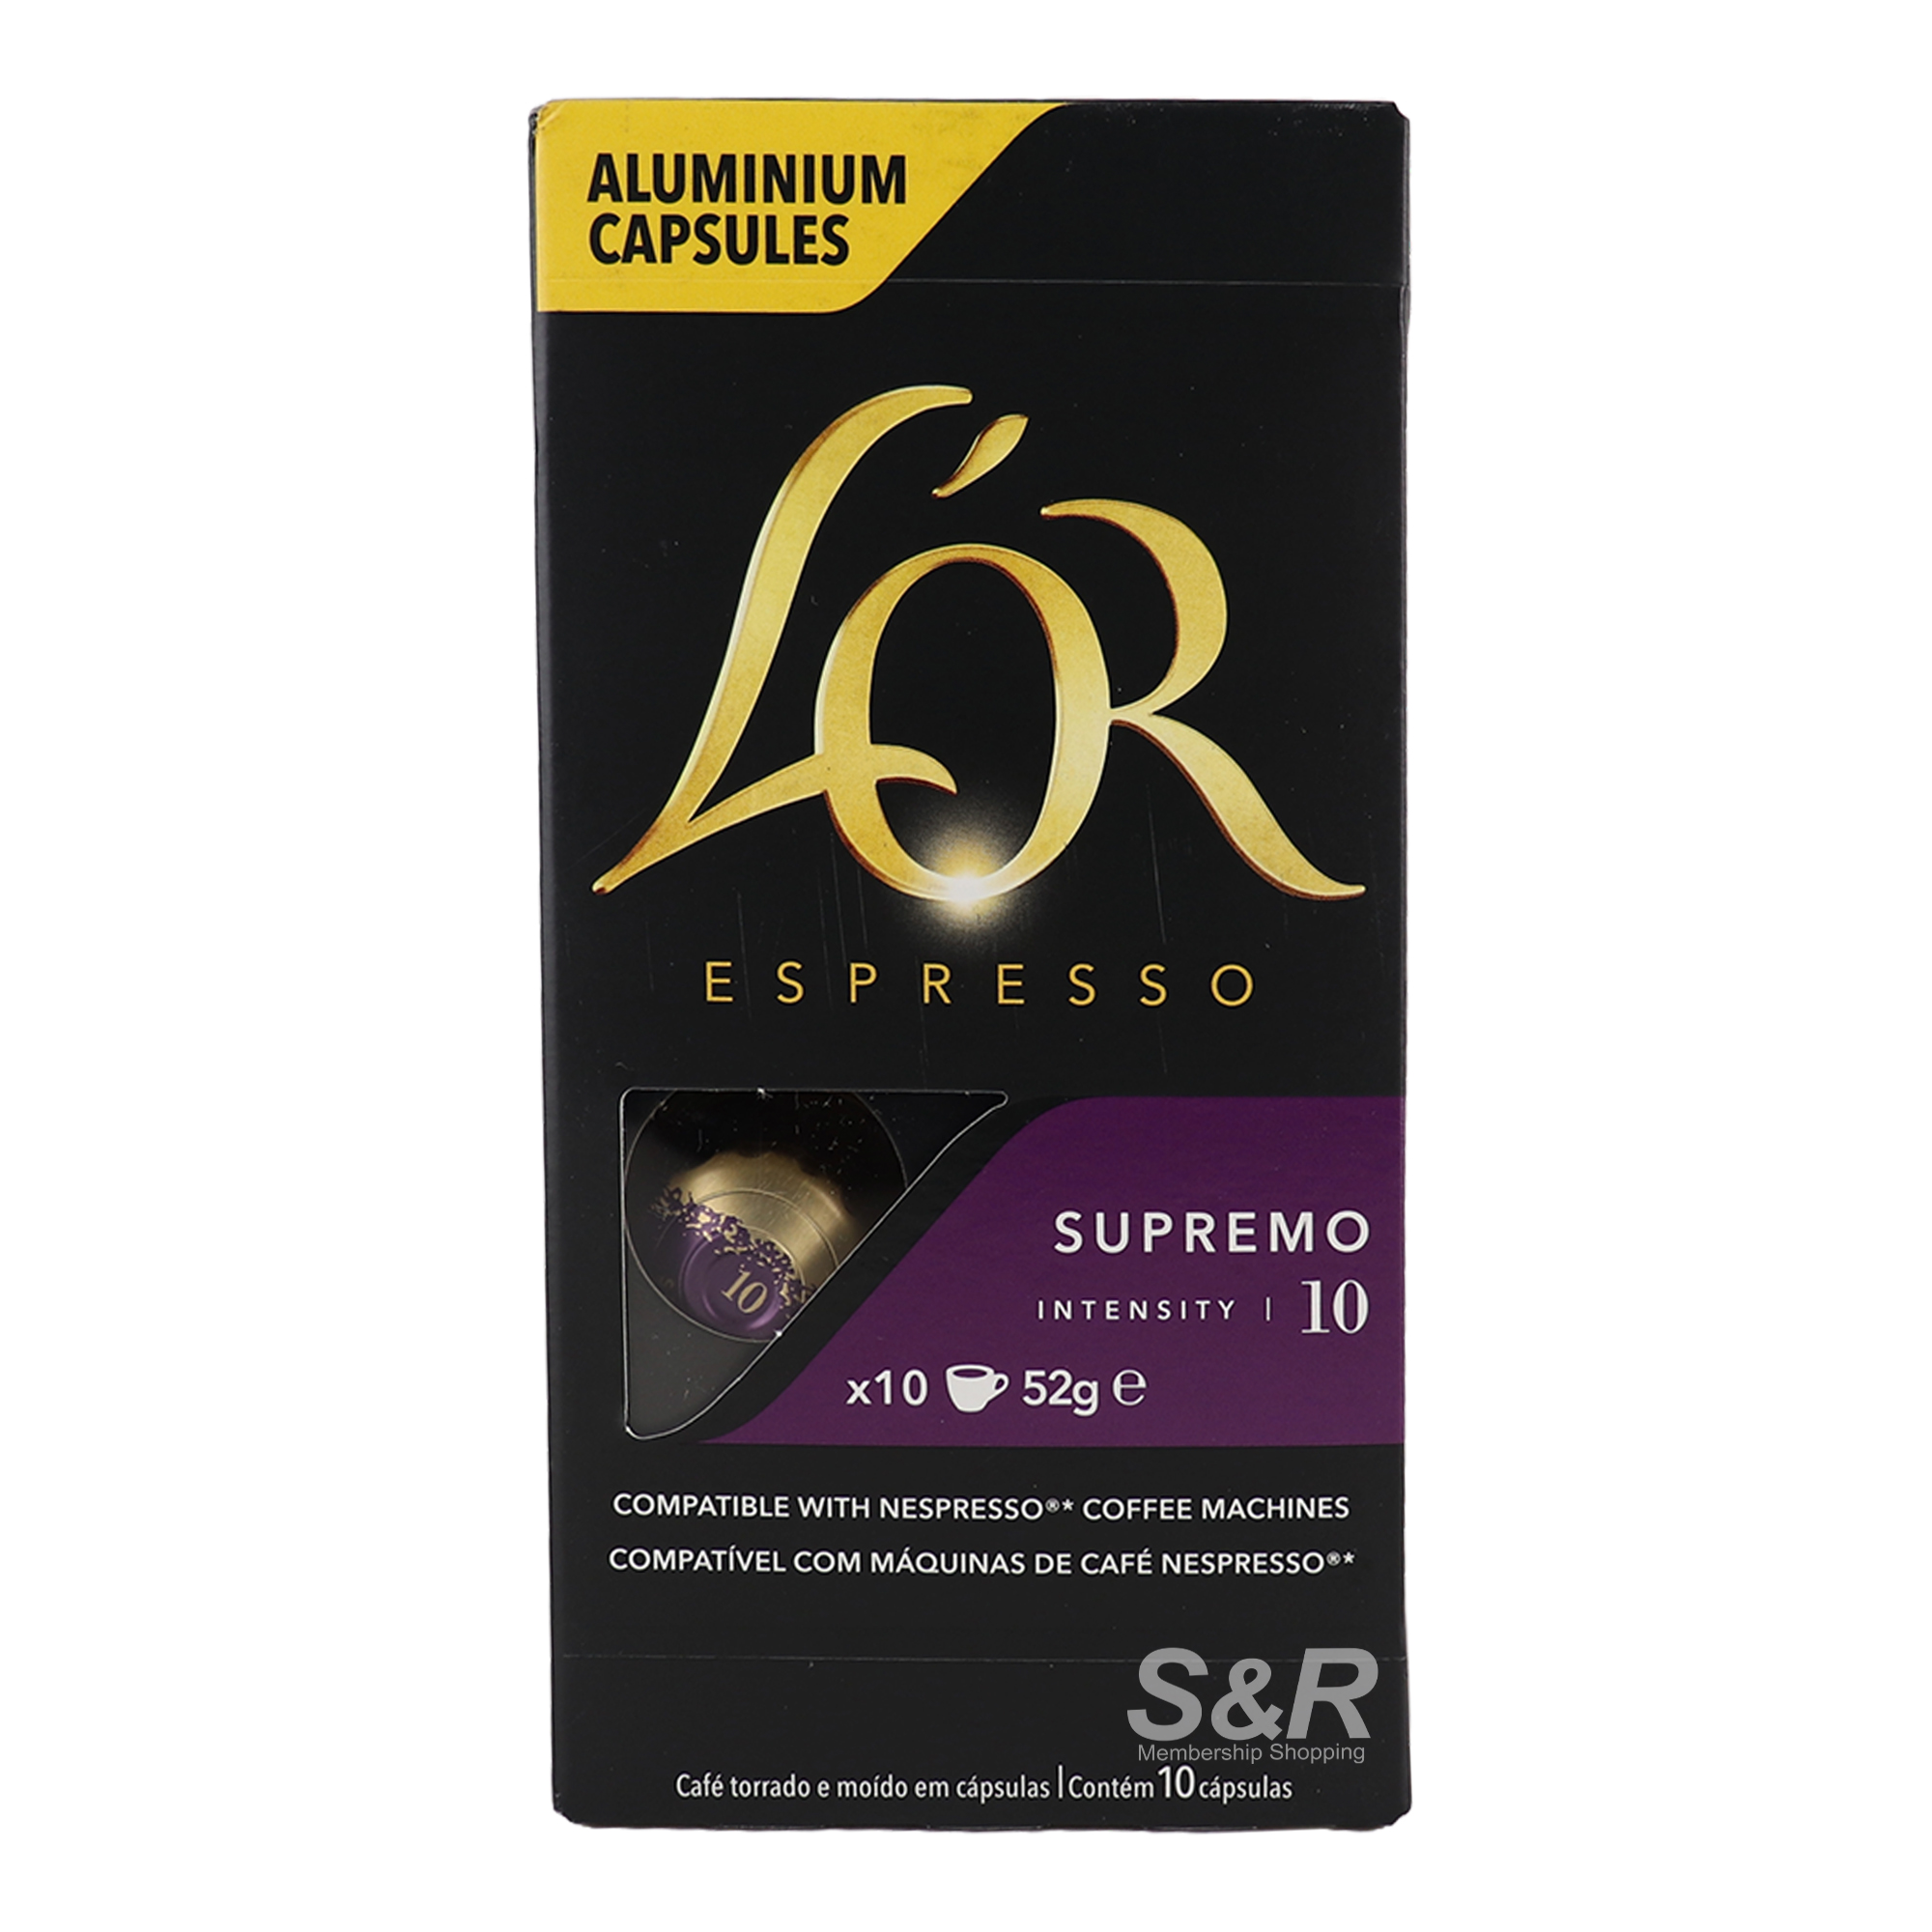 LOR Espresso Supremo Capsules 10pcs x 5.2g